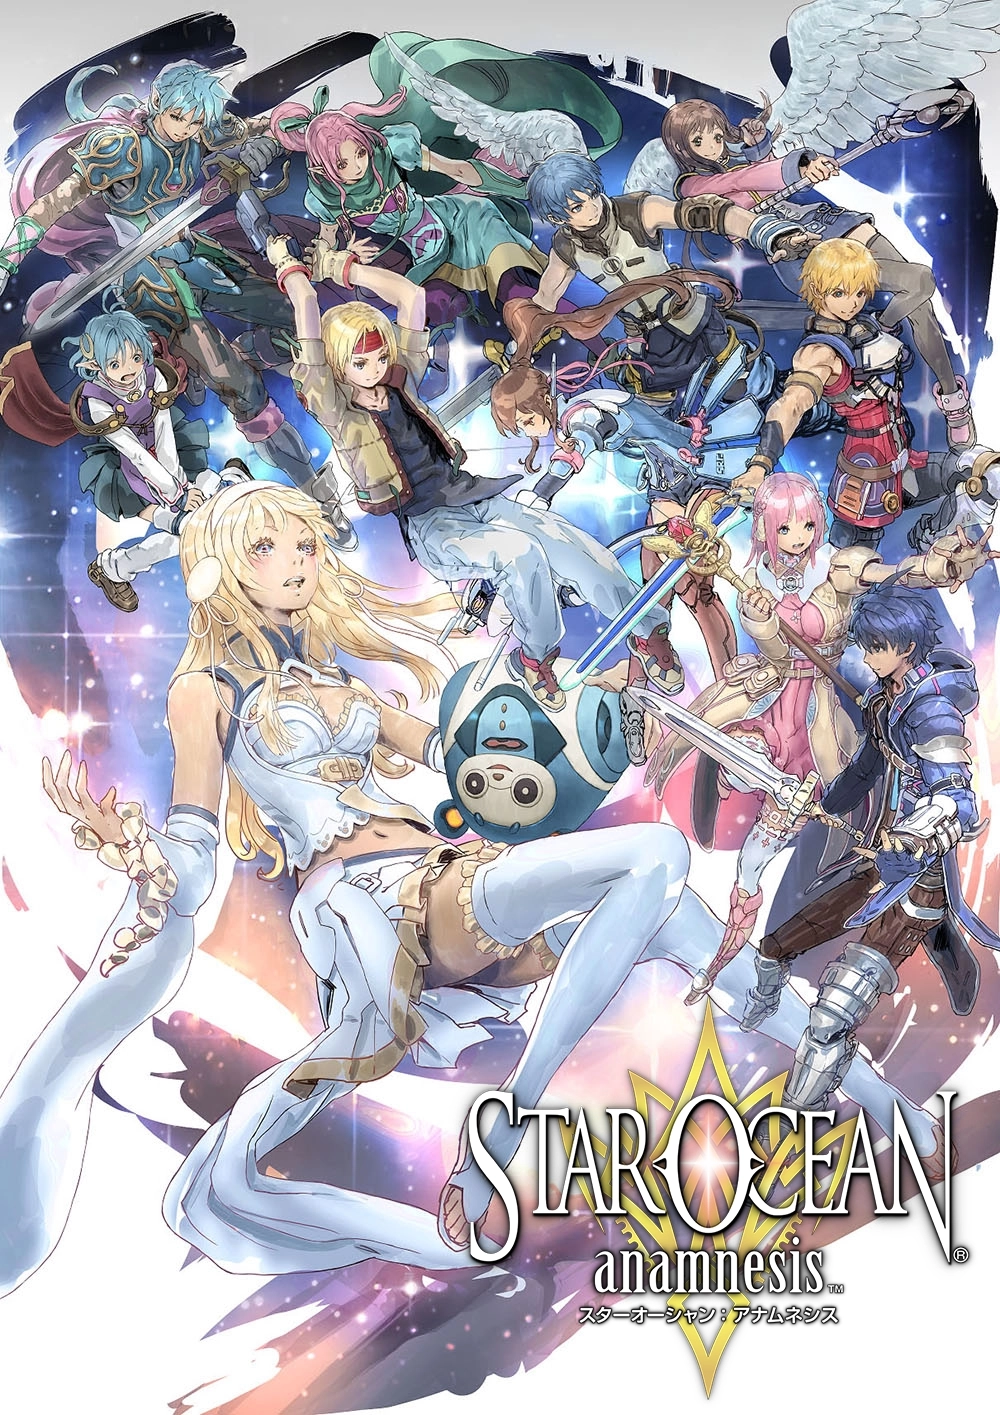 Star Ocean: Anamnesis Global Version Out